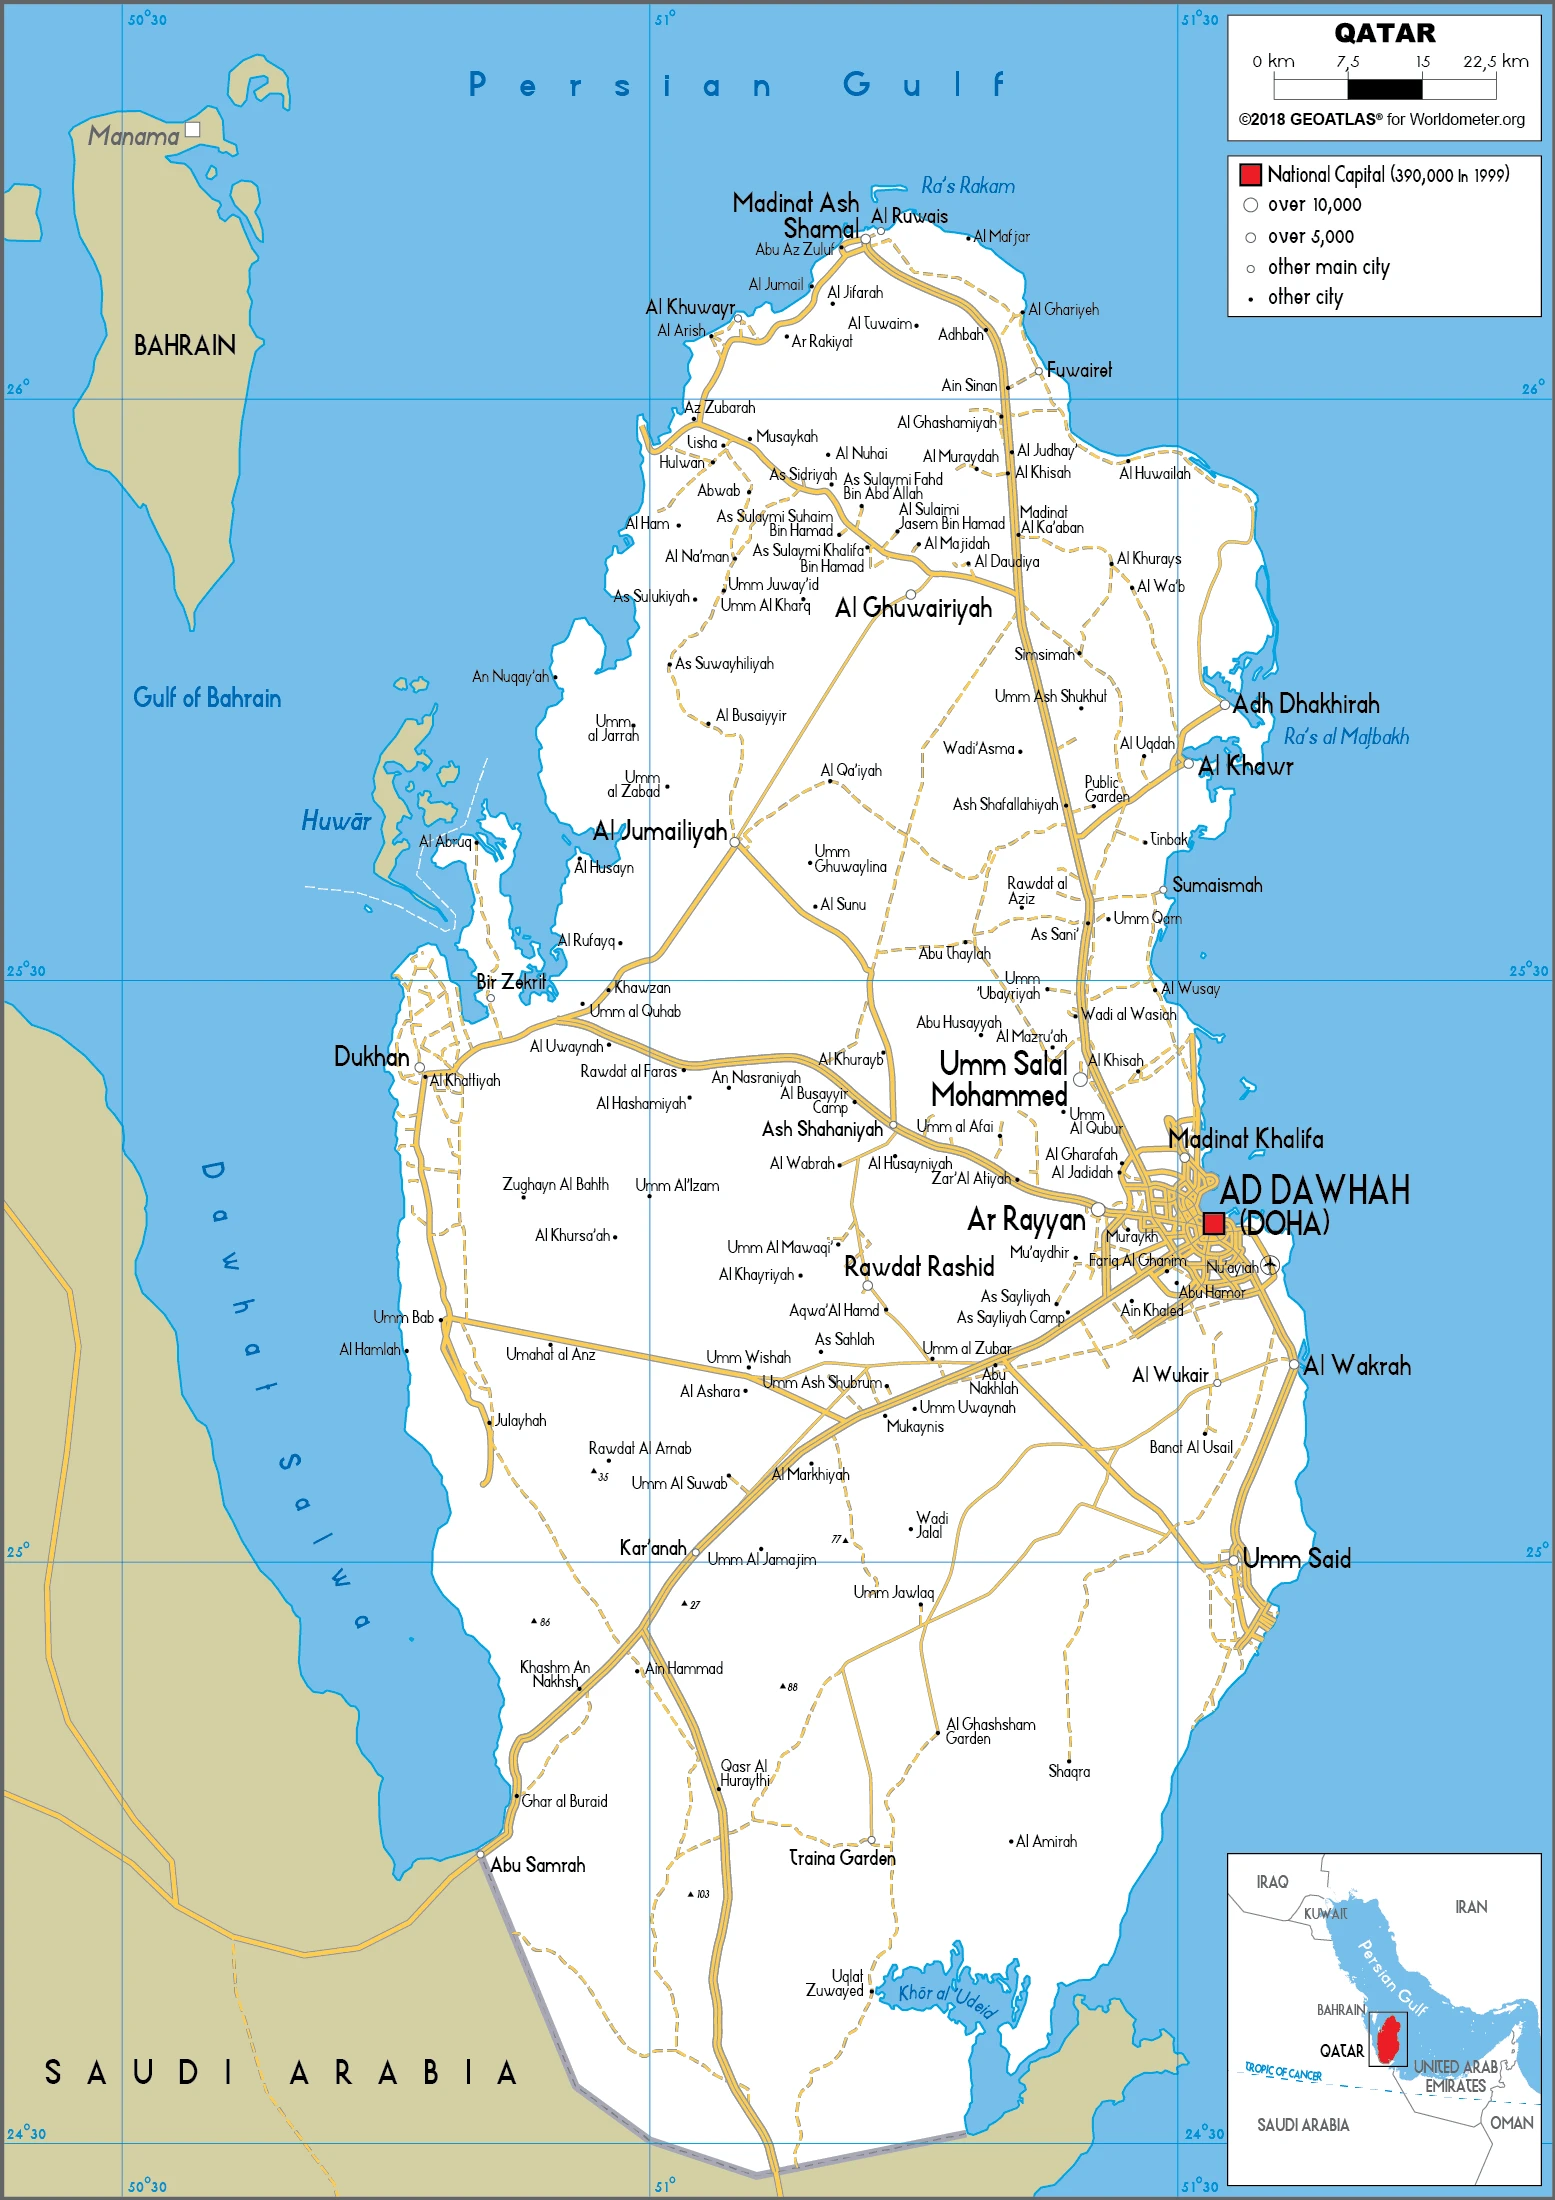 The route plan of the Qatari roadways.